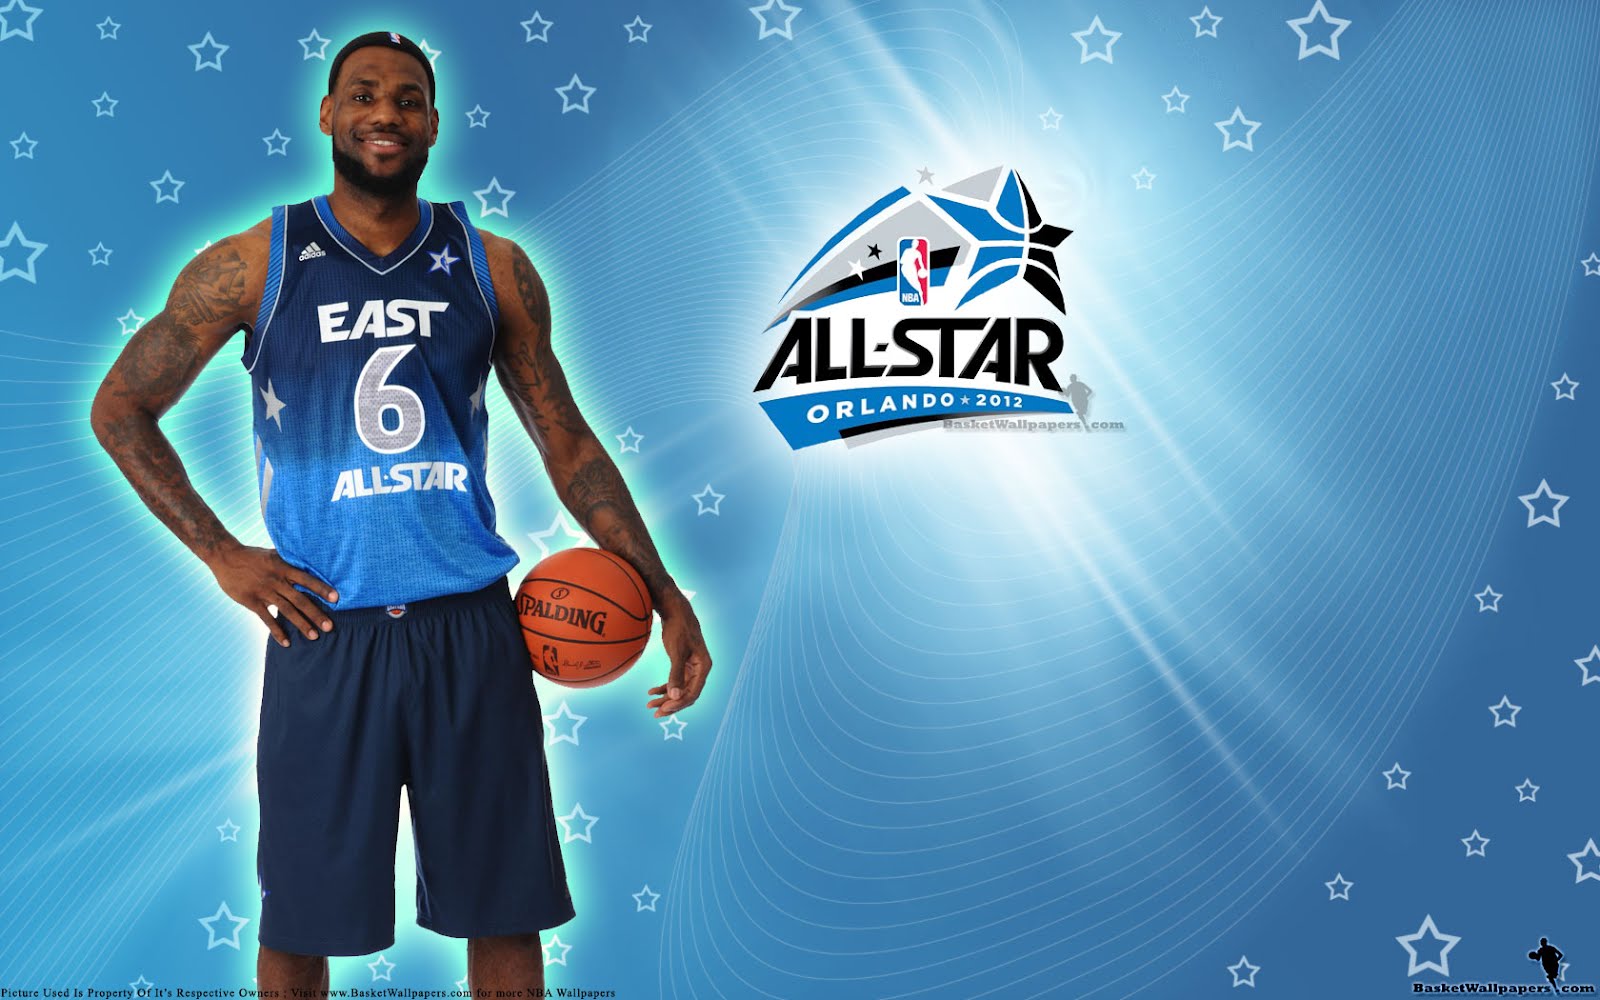 Sport Live EAST 2012 NBA All Star Wallpaper